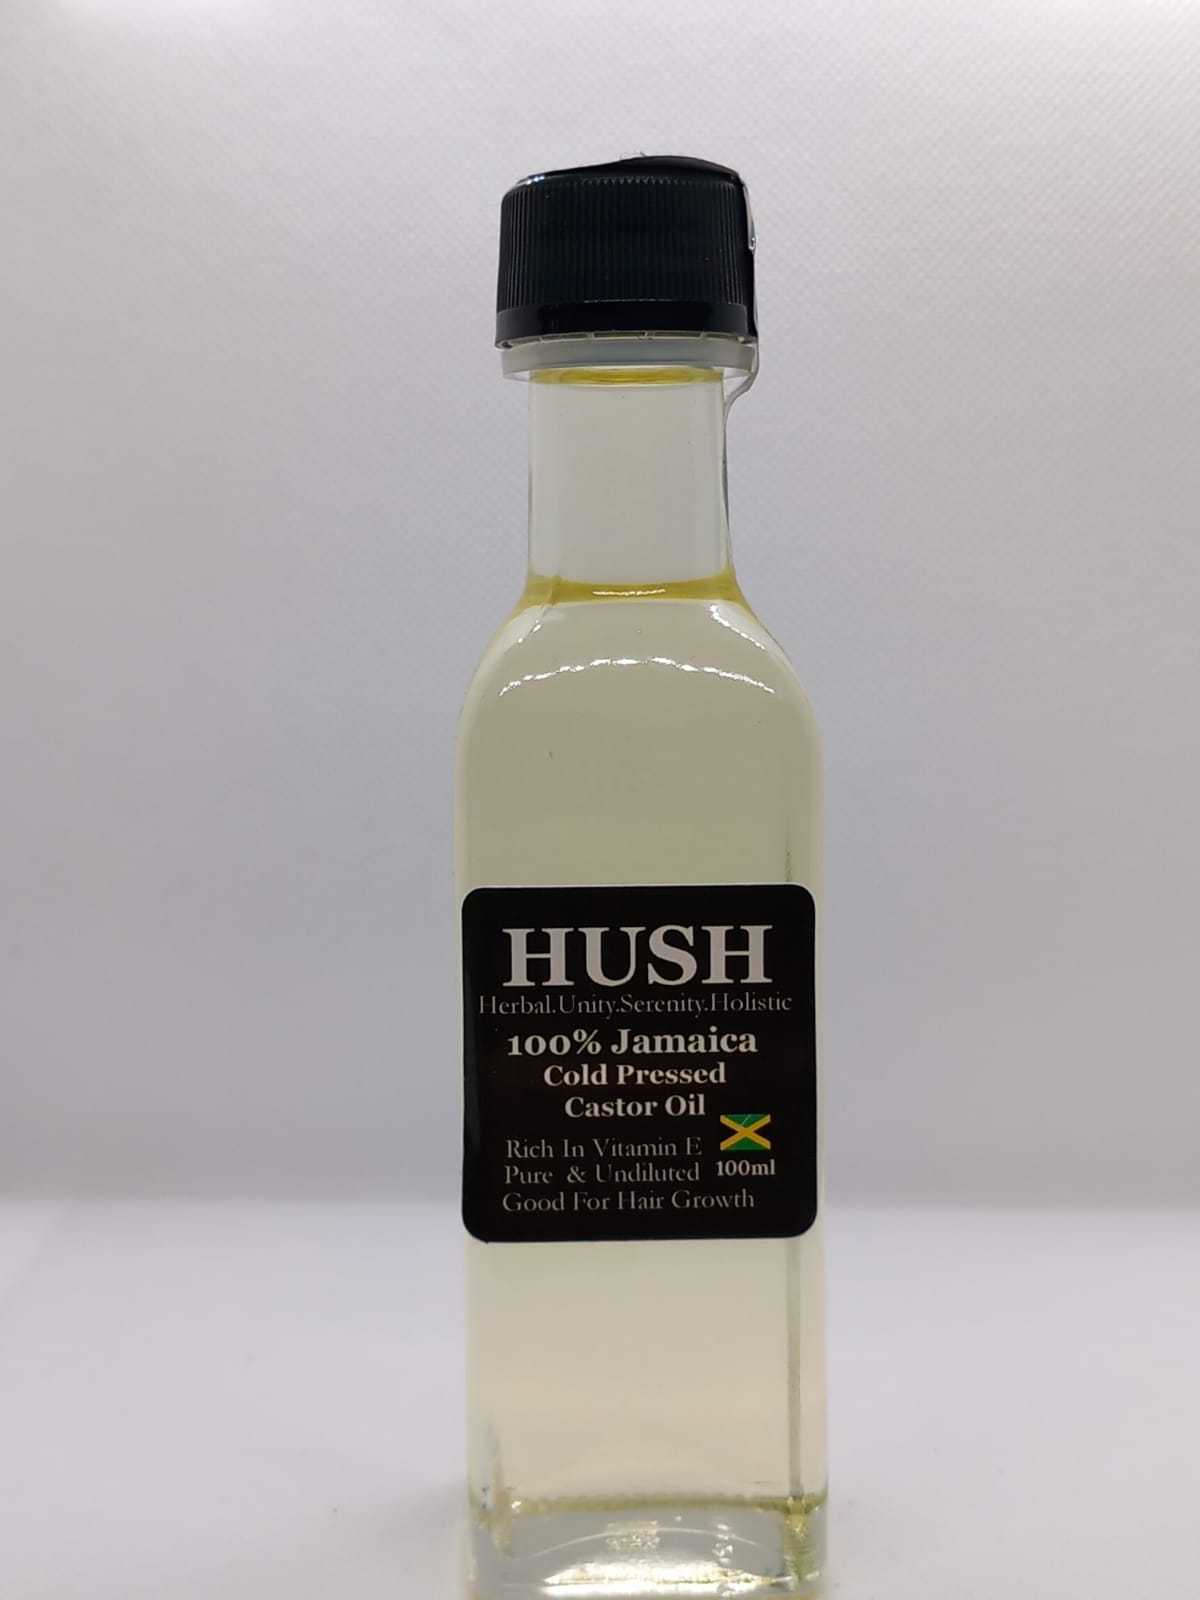 Cold Pressed Caster Oil - Hush Herbal